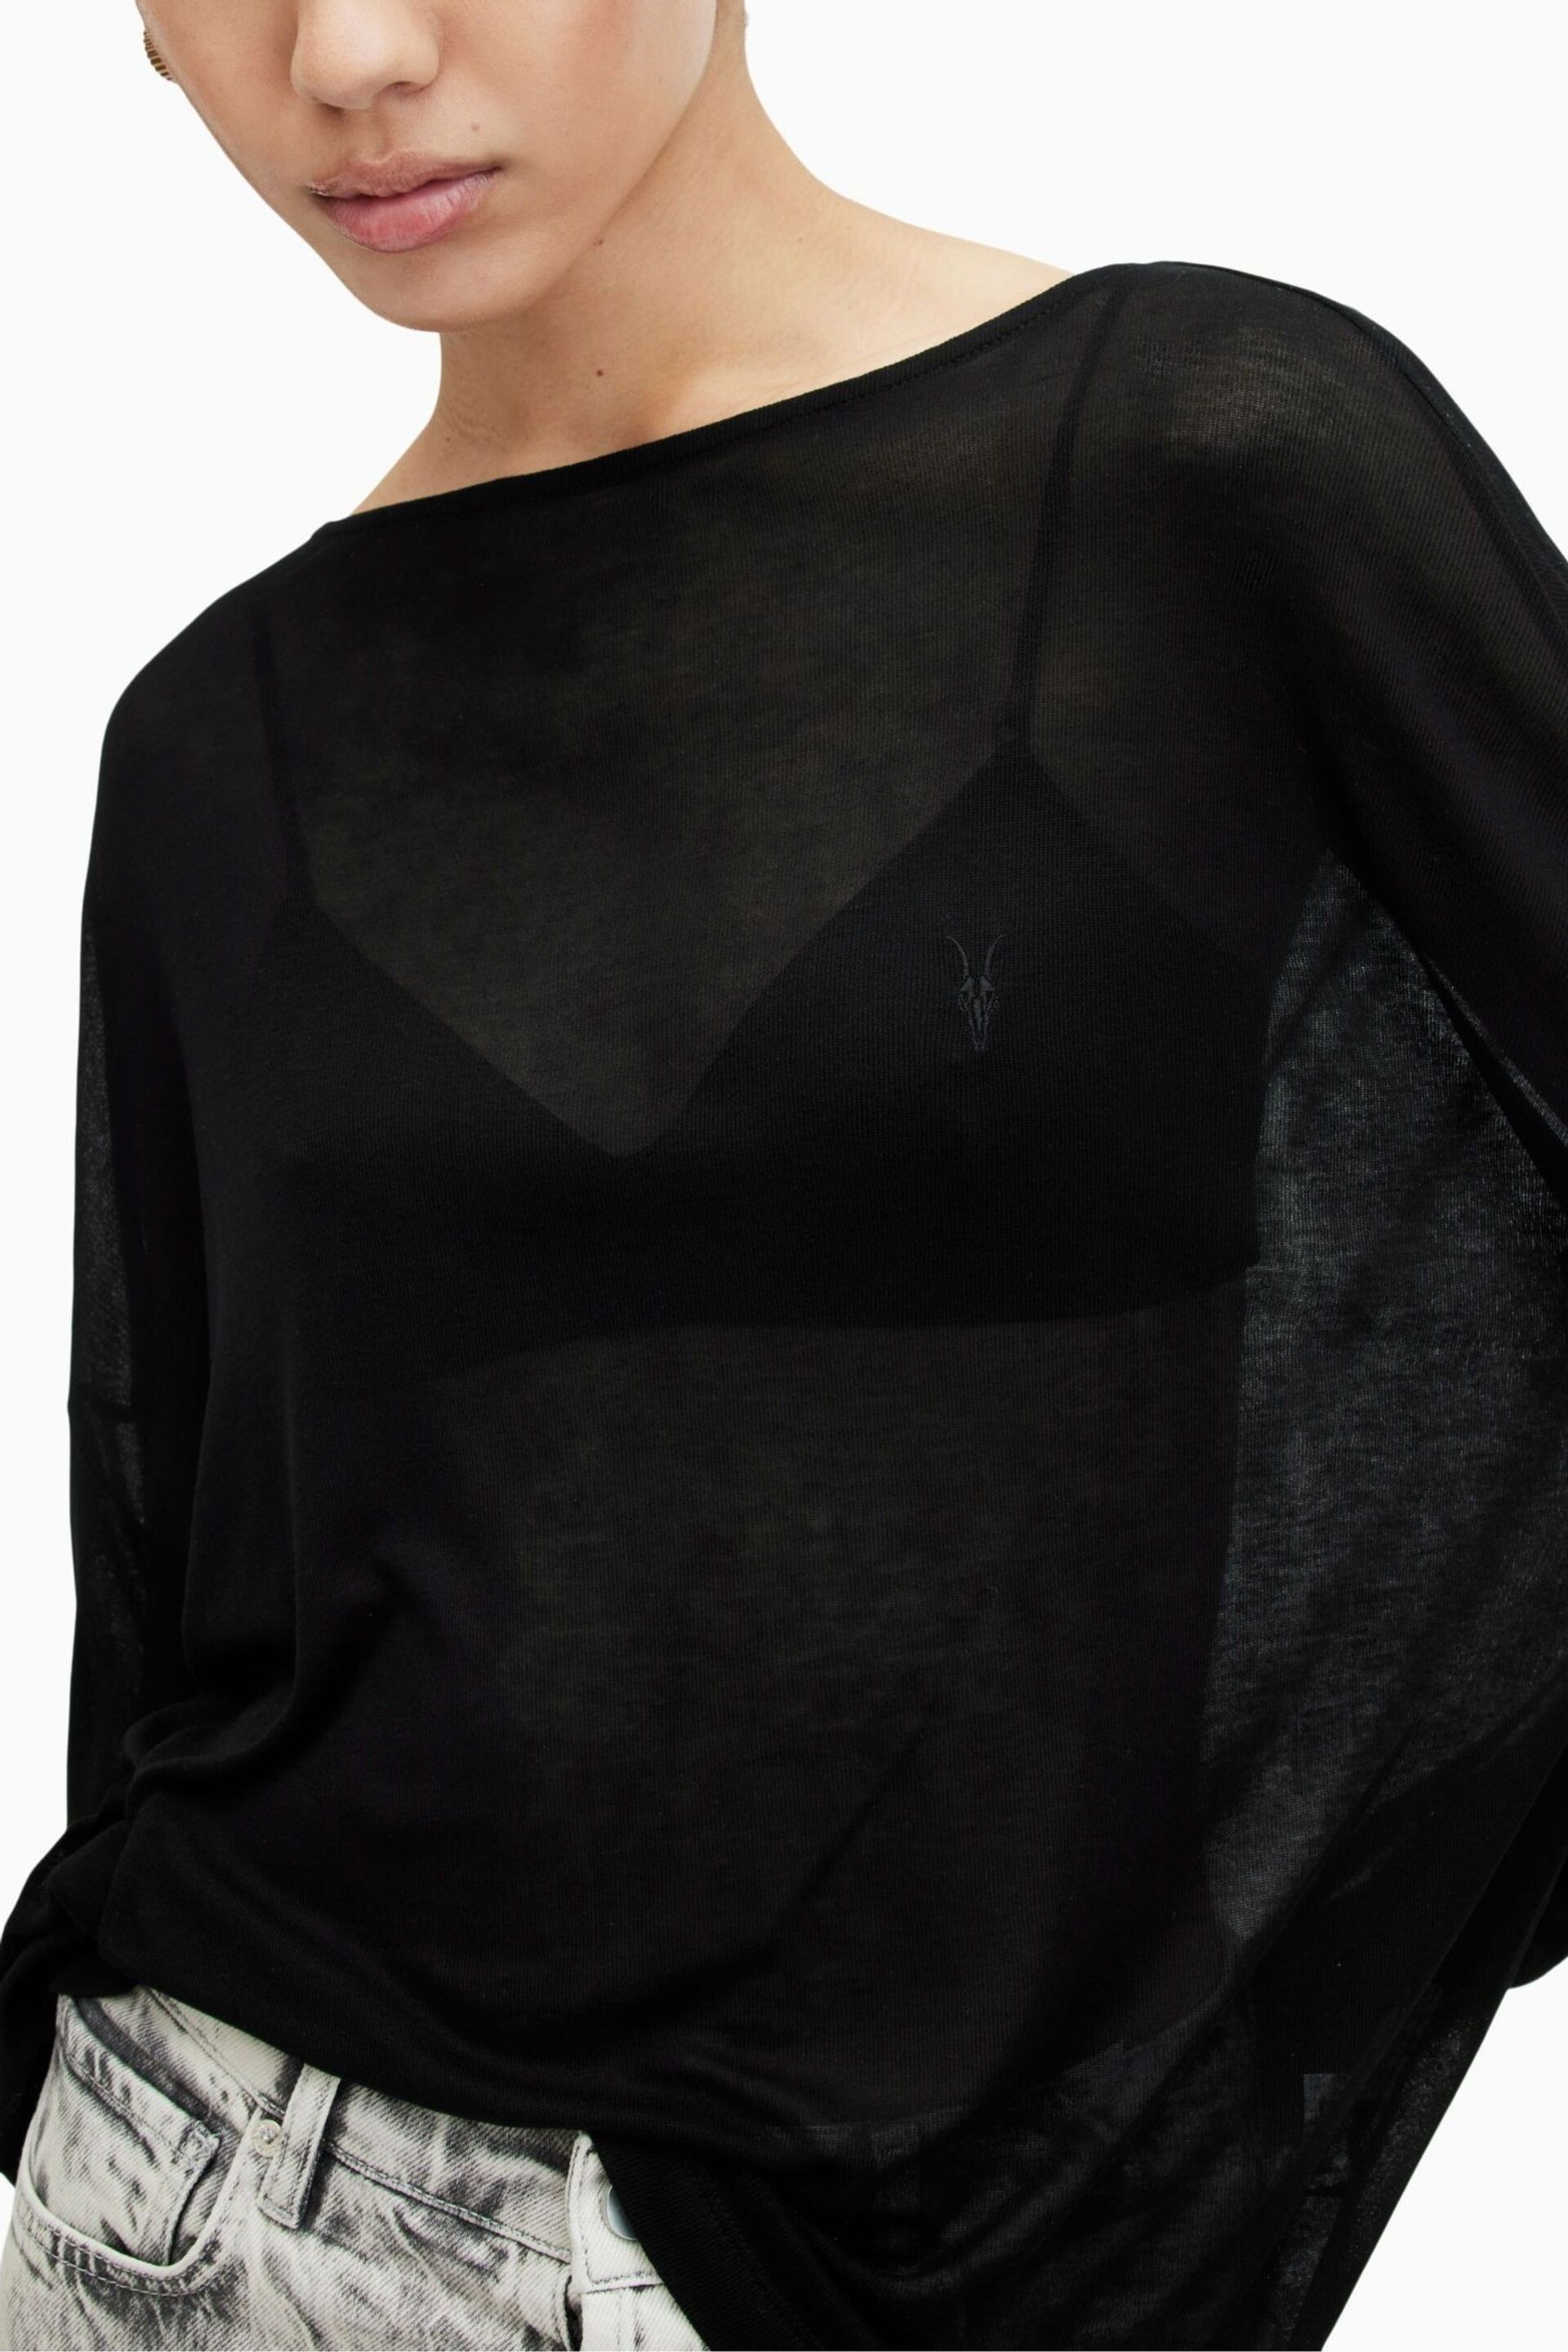 AllSaints Black Rita Francesco T-Shirt - Image 5 of 6